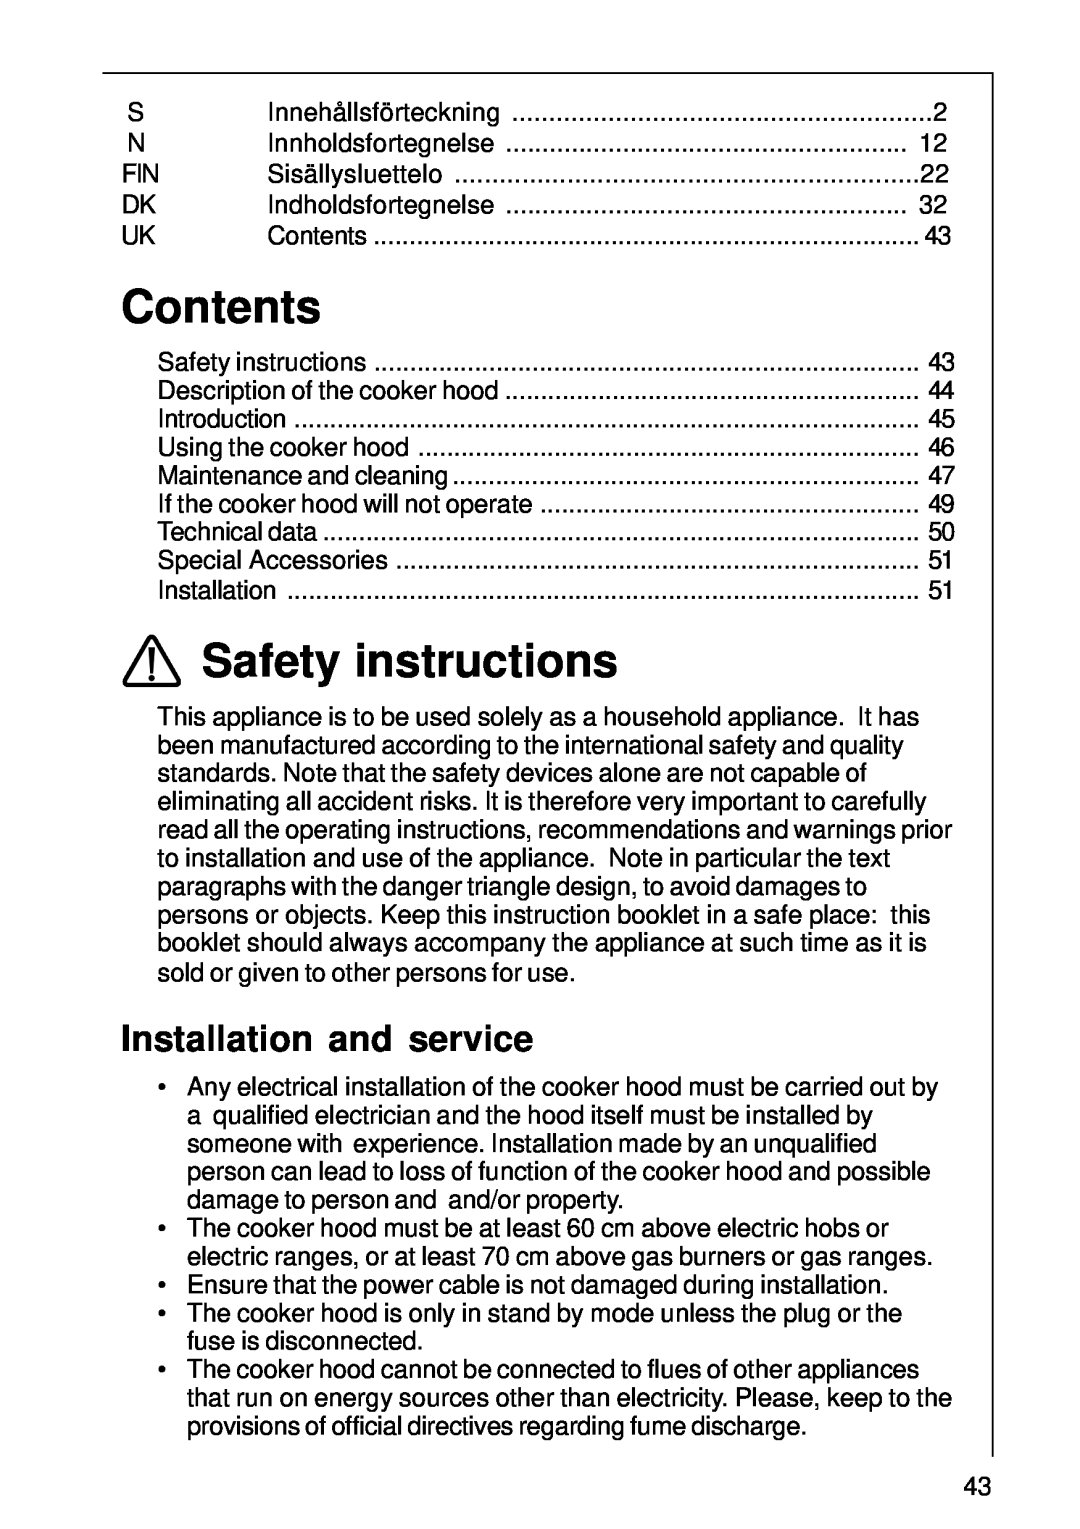 AEG 1400 D installation instructions Contents, Safety instructions, Installation and service 